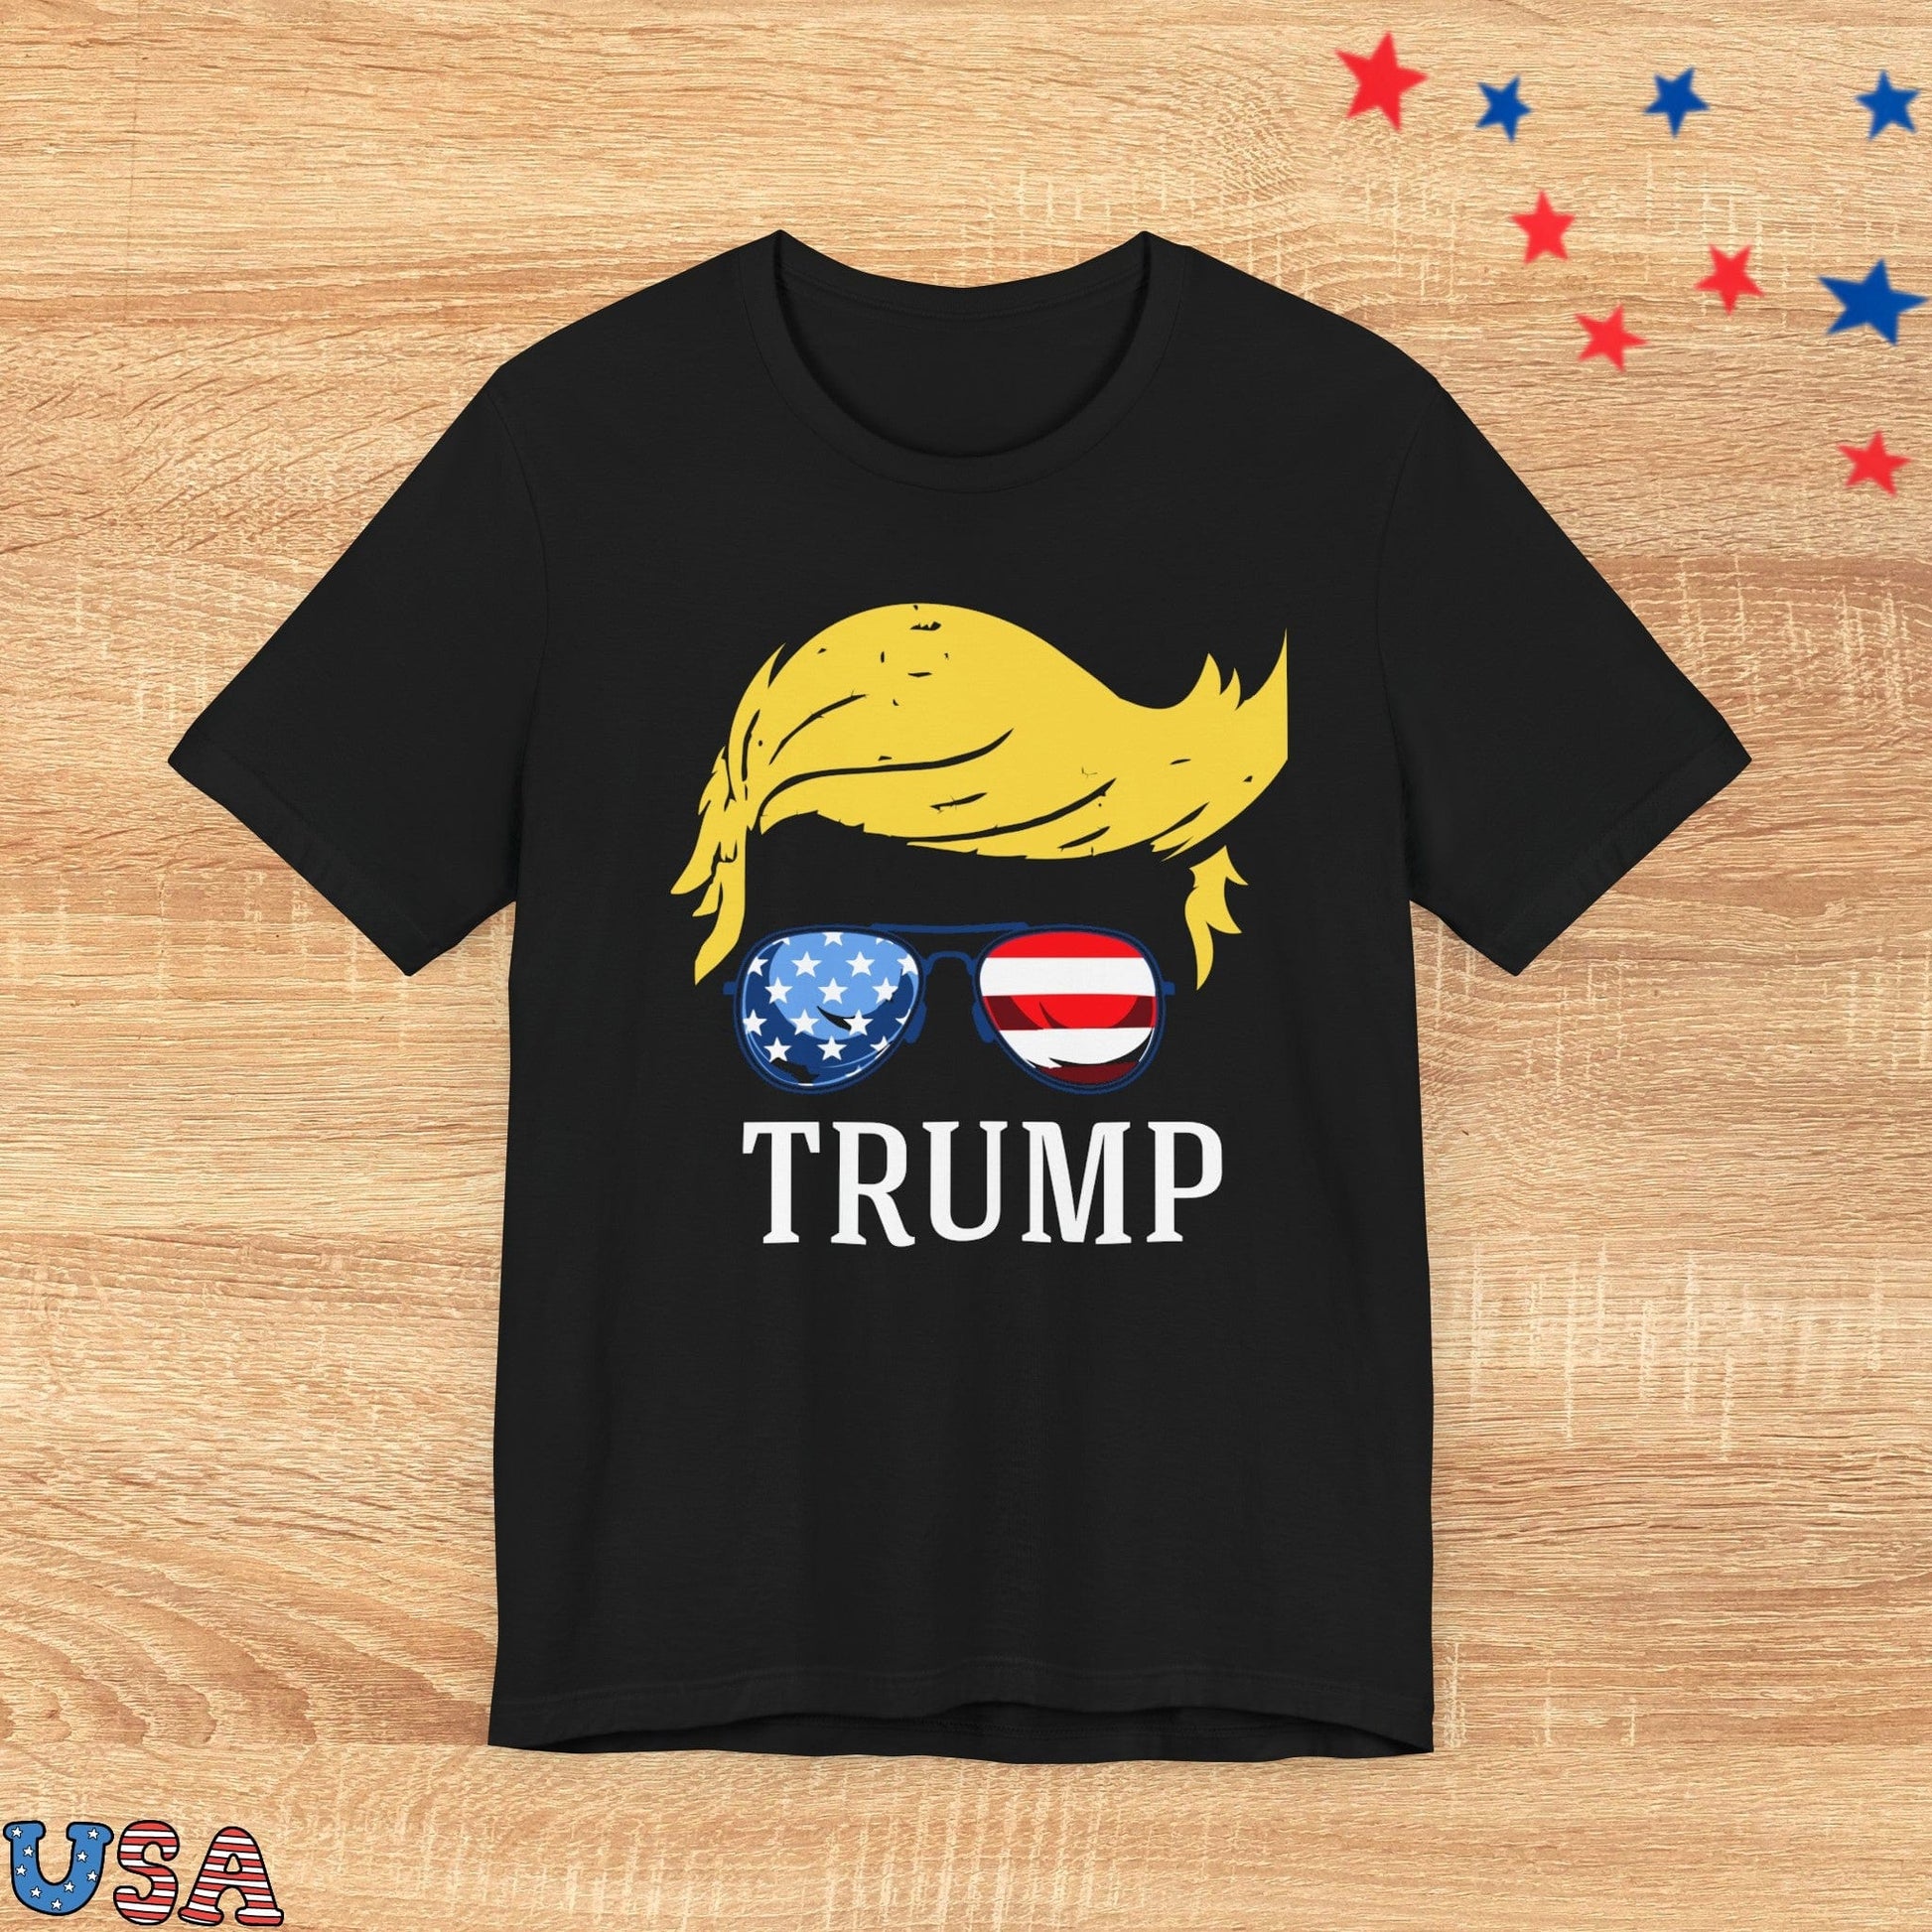 patriotic stars T-Shirt Black / XS Trump With USA Flag glasses